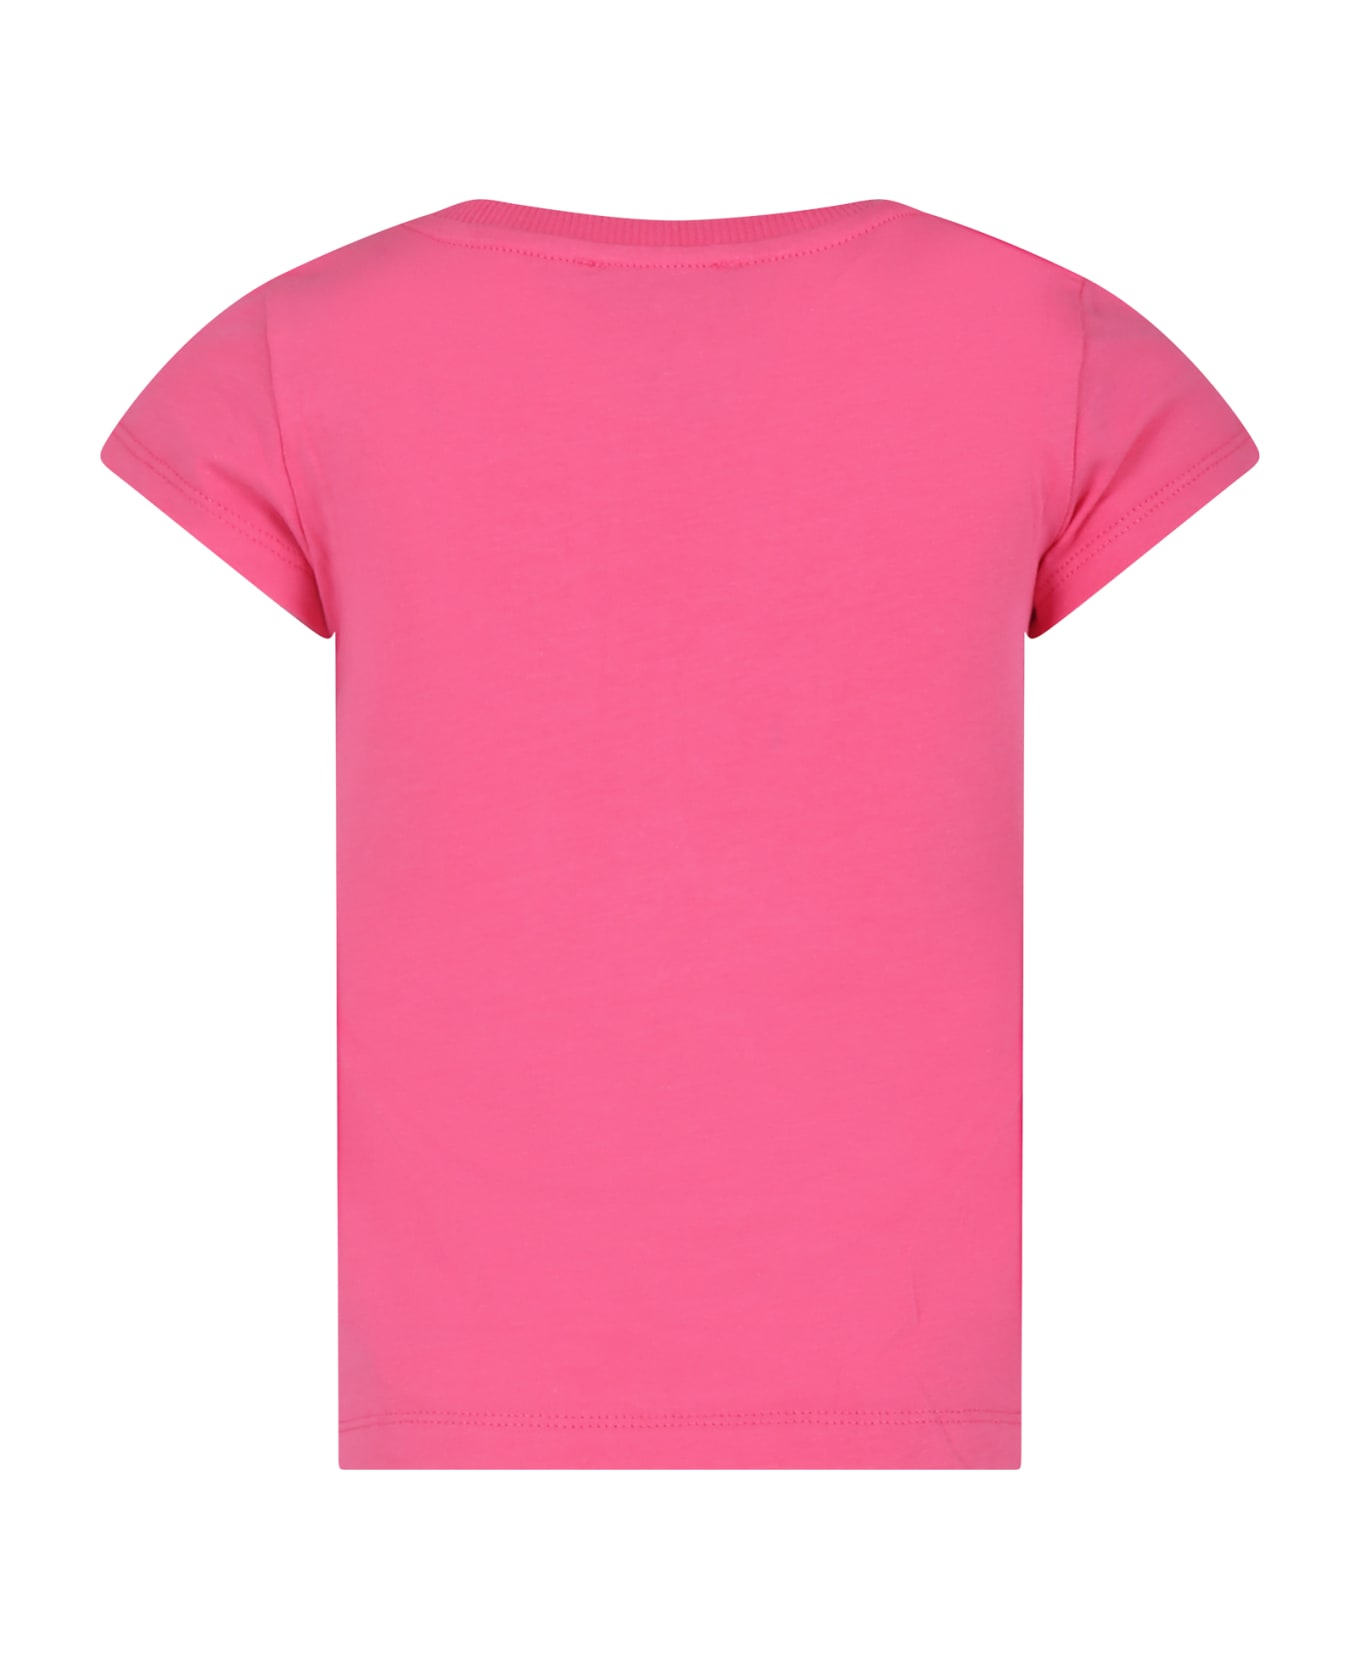 Moschino Fuchsia Crop T-shirt For Girl With Teddy Bears And Logo - Fuchsia